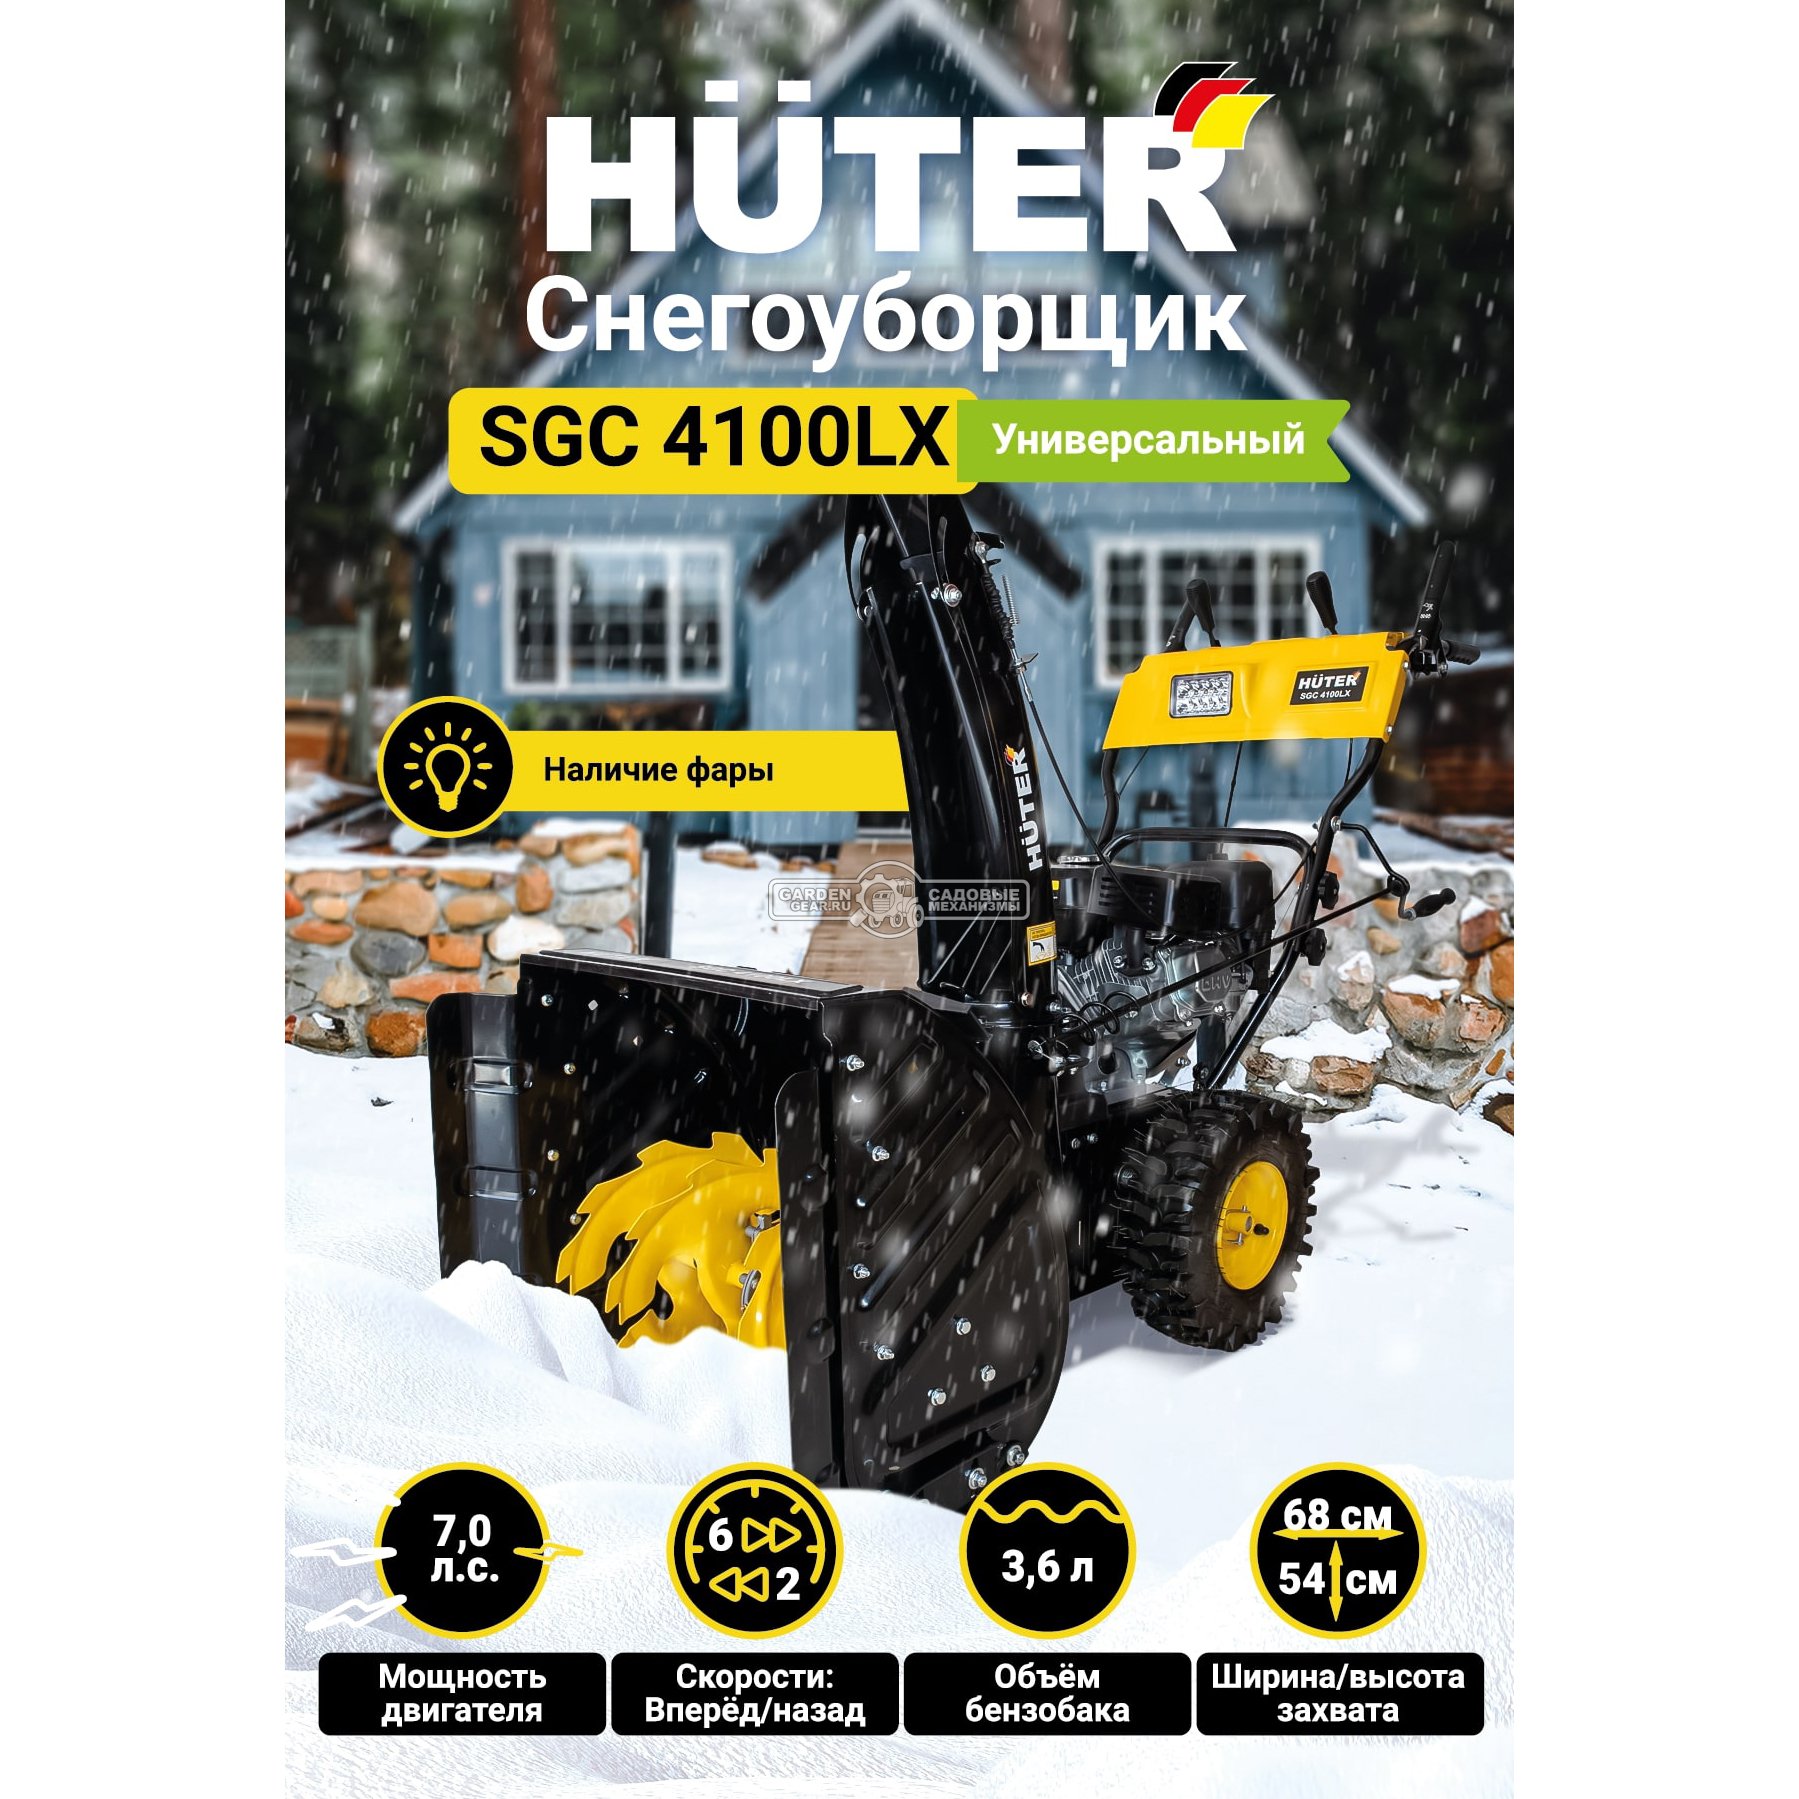 Снегоуборщик Huter SGC 4100LX (PRC, 56 см., Huter, 7.0 л.с., фара, скорости 5/2, 73 кг)